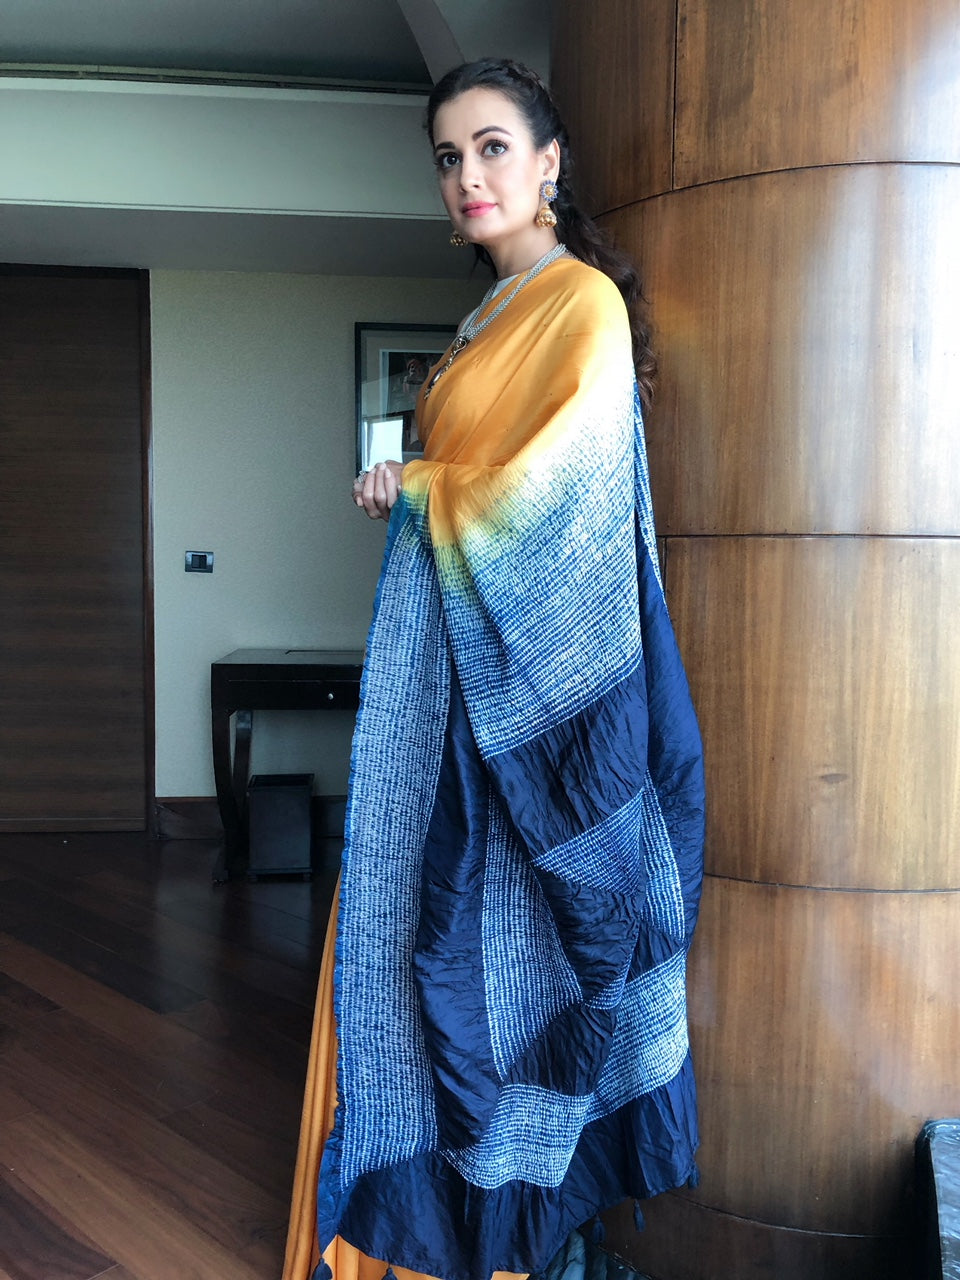 Samantha Akkineni attended Rana Daggubati's wedding in a navy blue floral  silk sari | VOGUE India